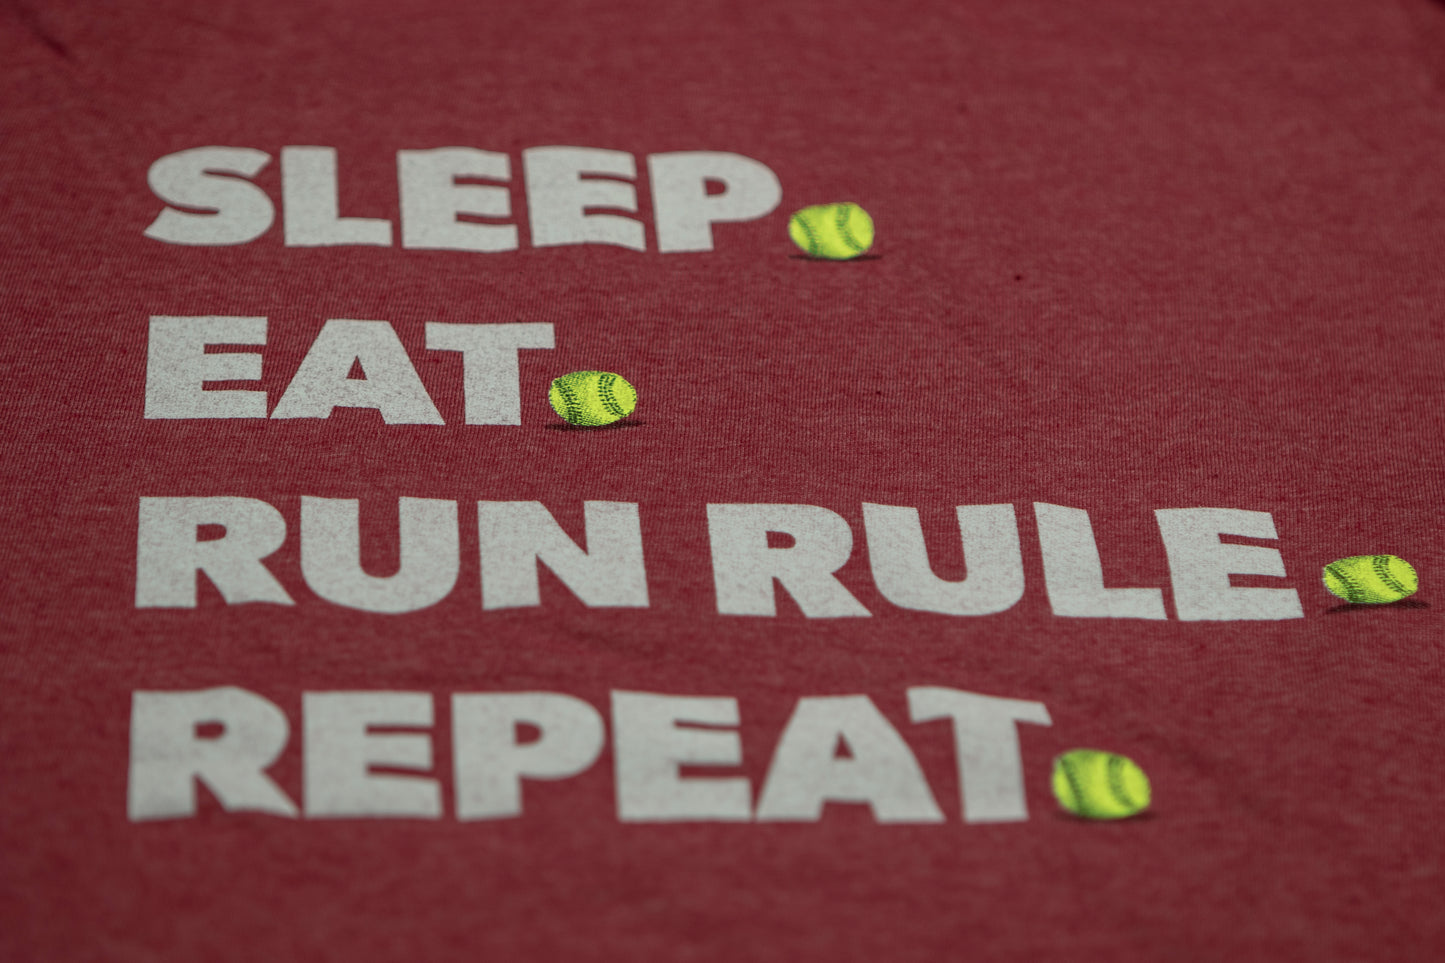 Youth-sized Sleep. Eat. Run Rule. Repeat. Unisex t-shirts